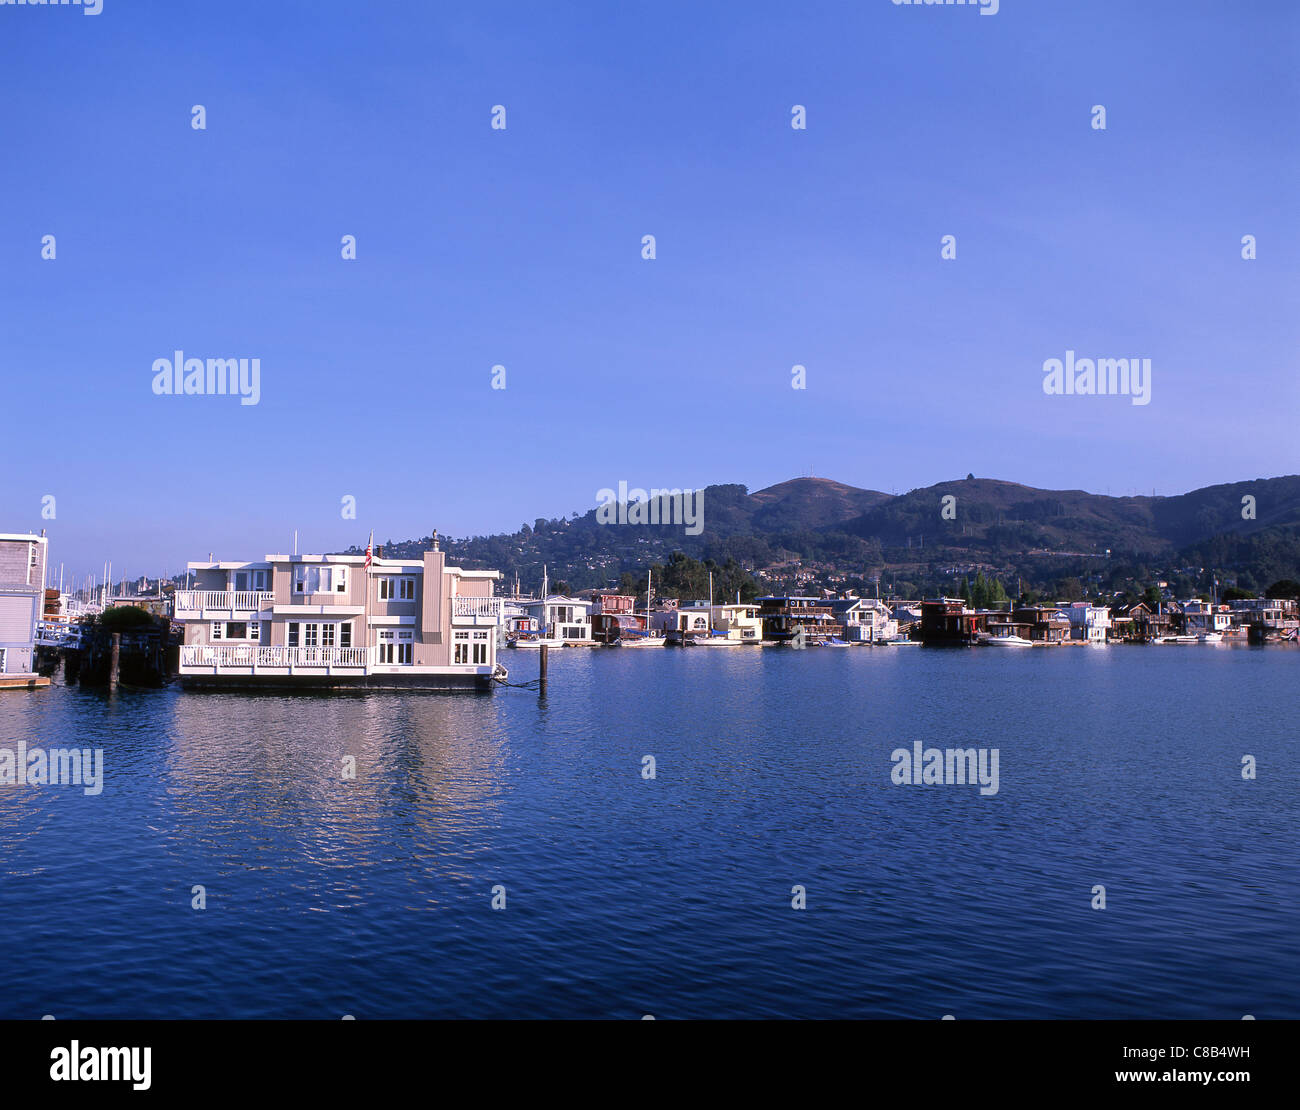 Sausalito Hausboote, Waldo Point Harbor, Sausalito, San Francisco Bay Area, Marin County, Kalifornien, Vereinigte Staaten von Amerika Stockfoto